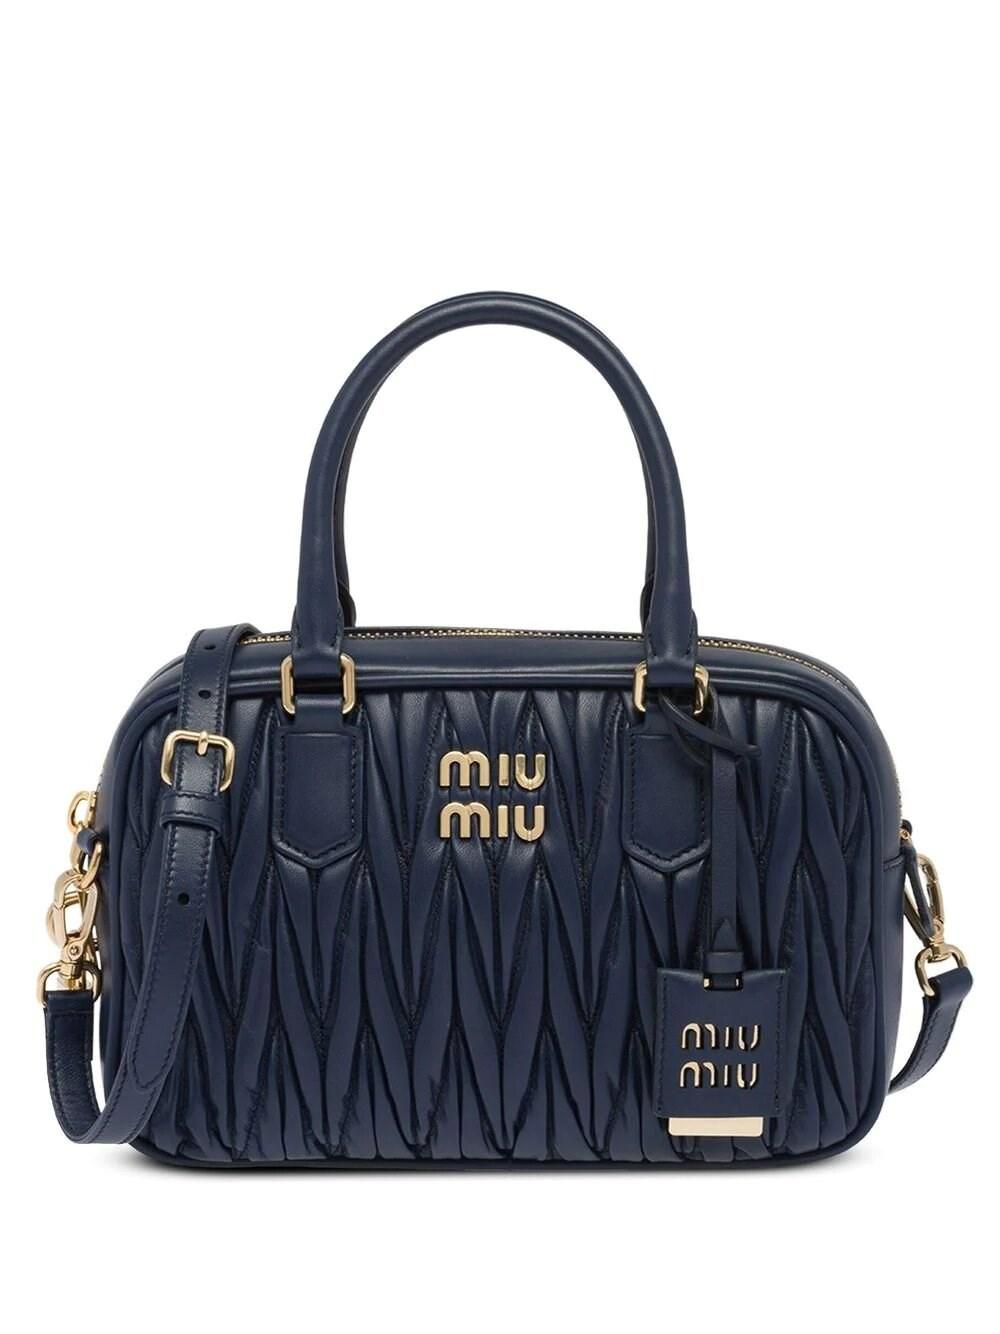 Miu Miu Wander Matelassé Nappa Leather Mini Hobo Bag in Blue